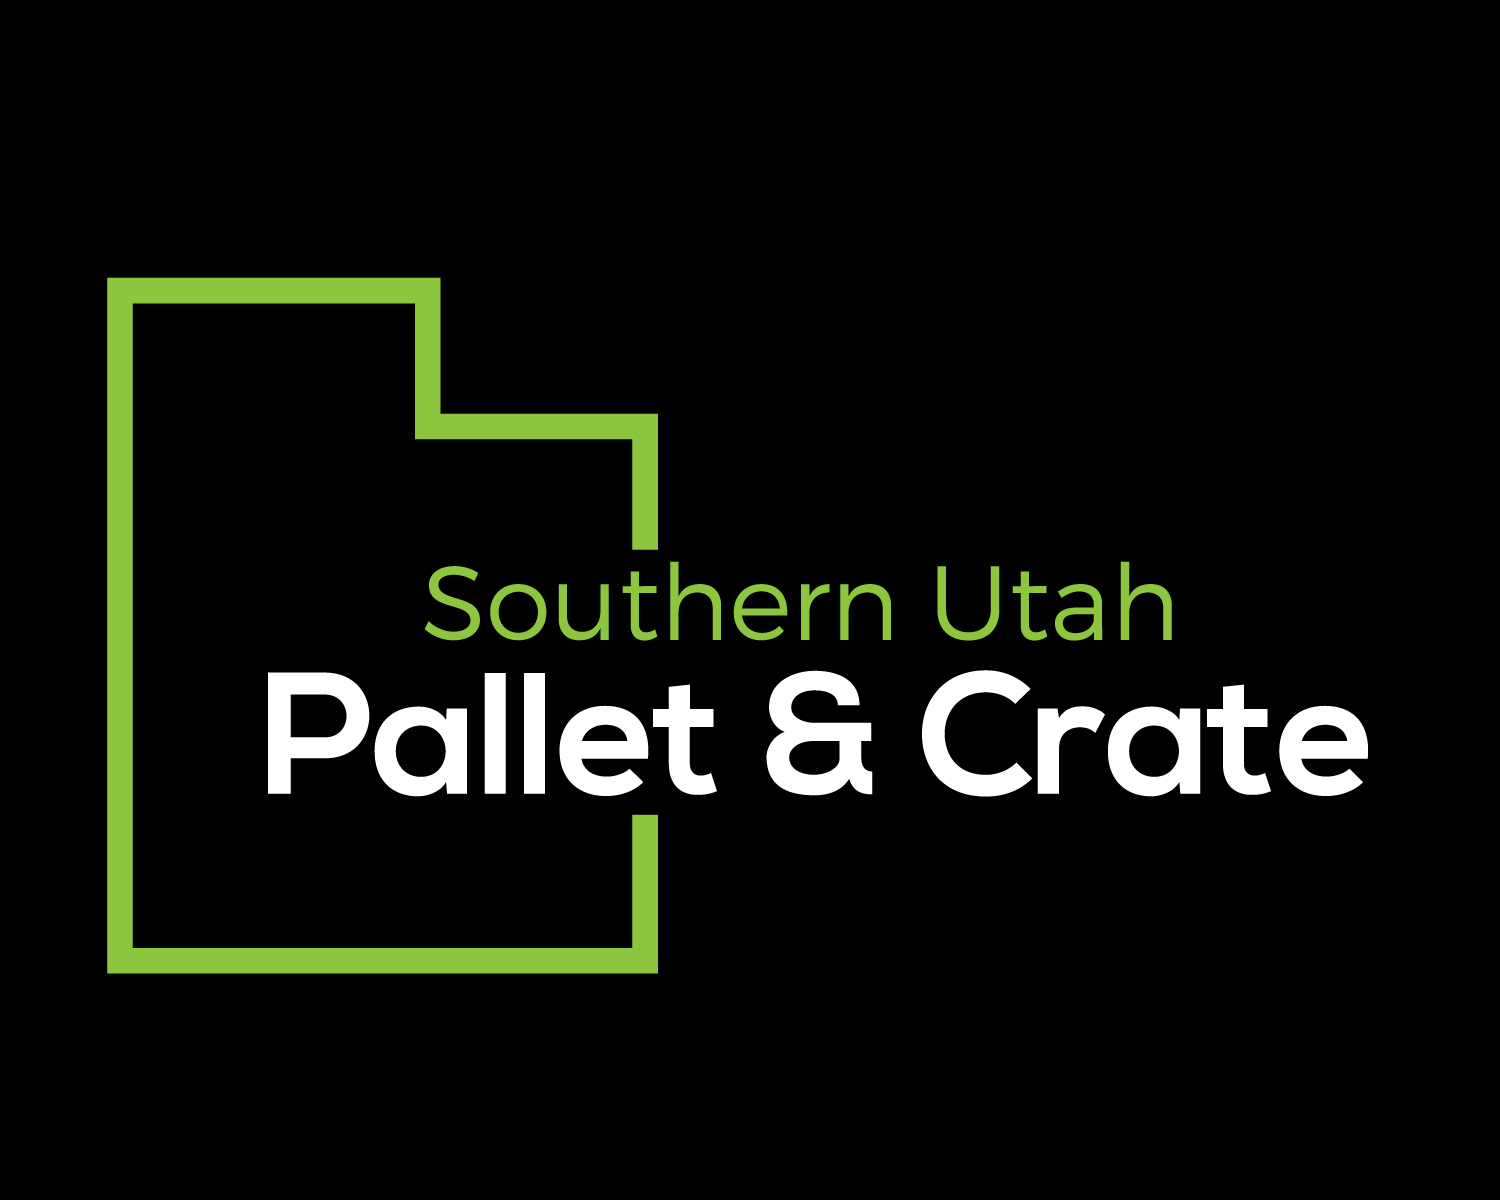 Southern Utah Pallet & Crate